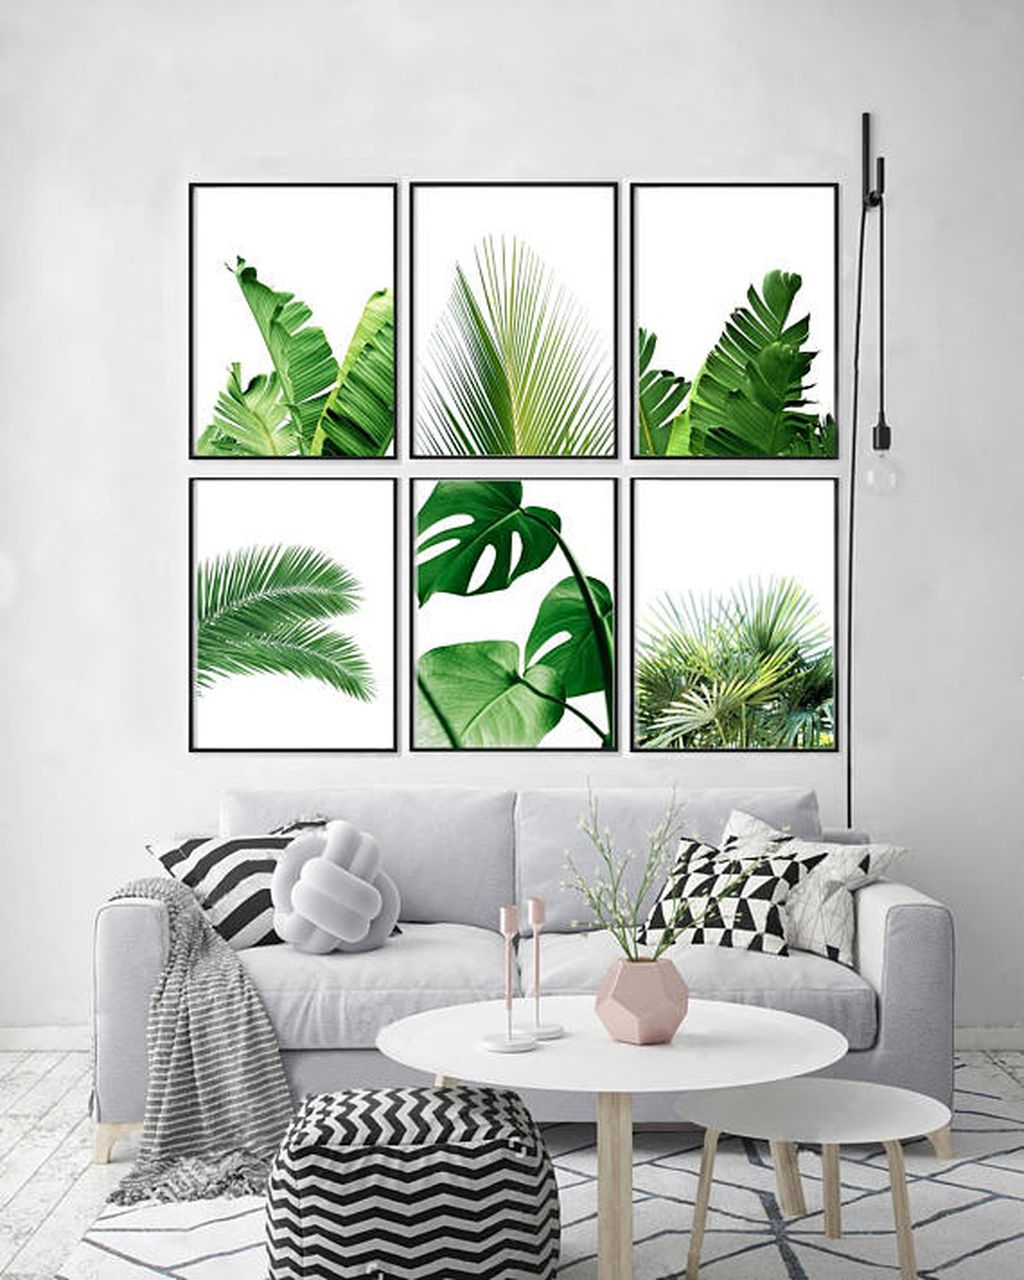 Splendid Tropical Leaf Decor Ideas For Home Design 23